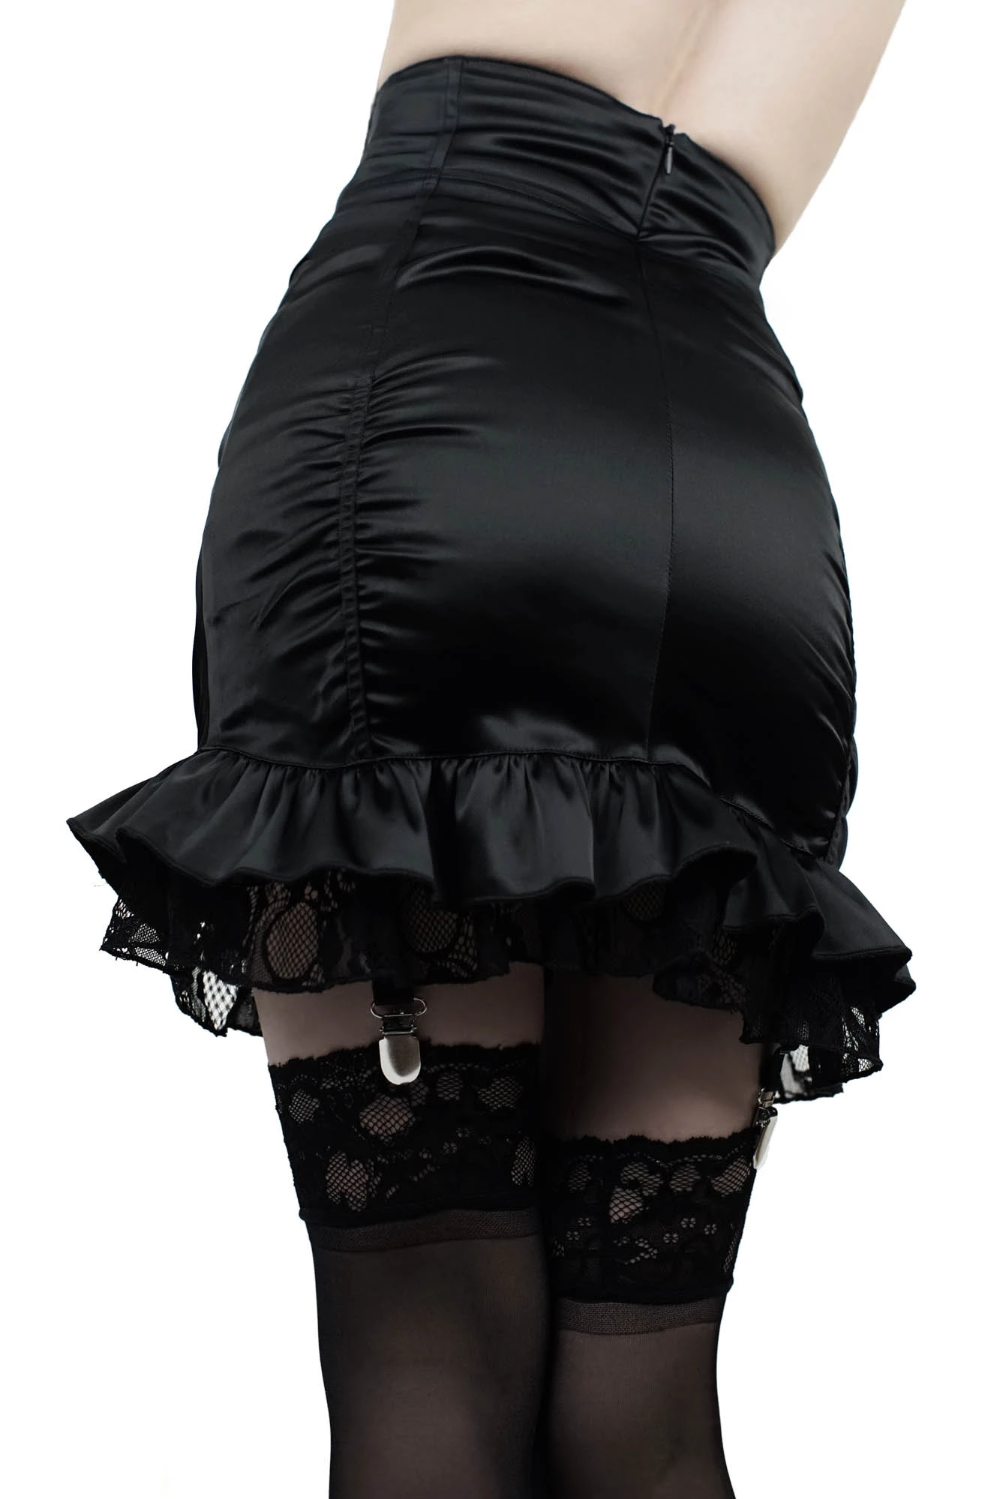 12 dress Skirt stockings ideas